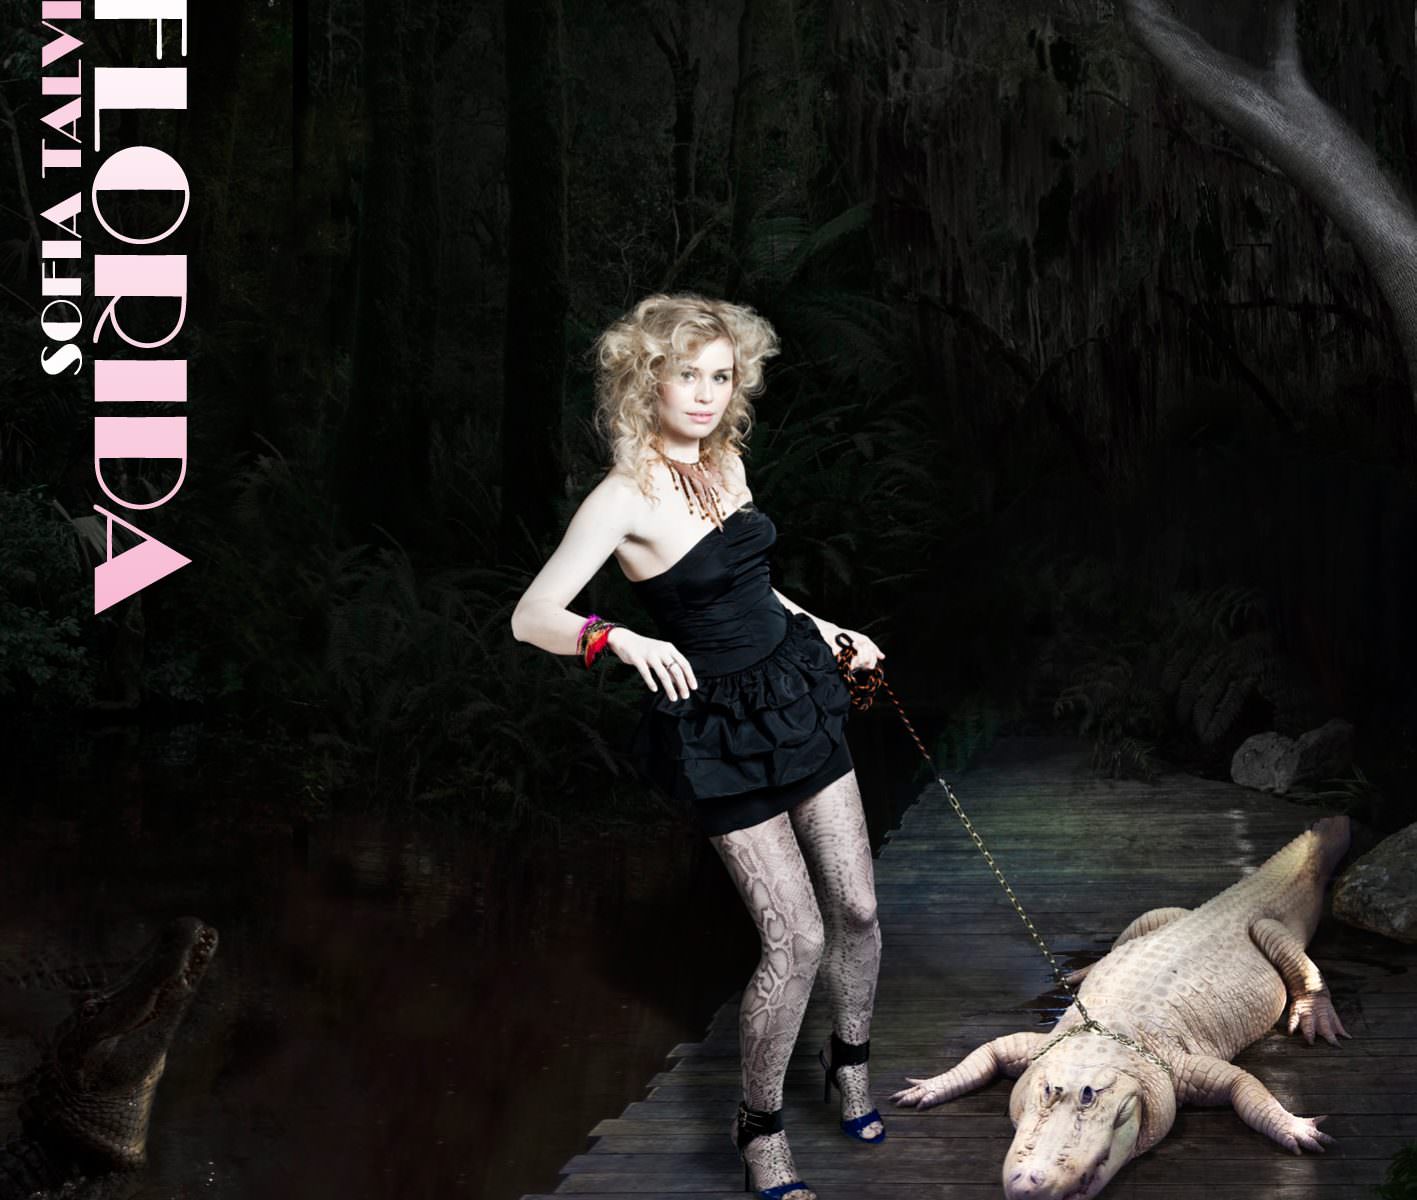 Florida, the new album from Sofia Talvik